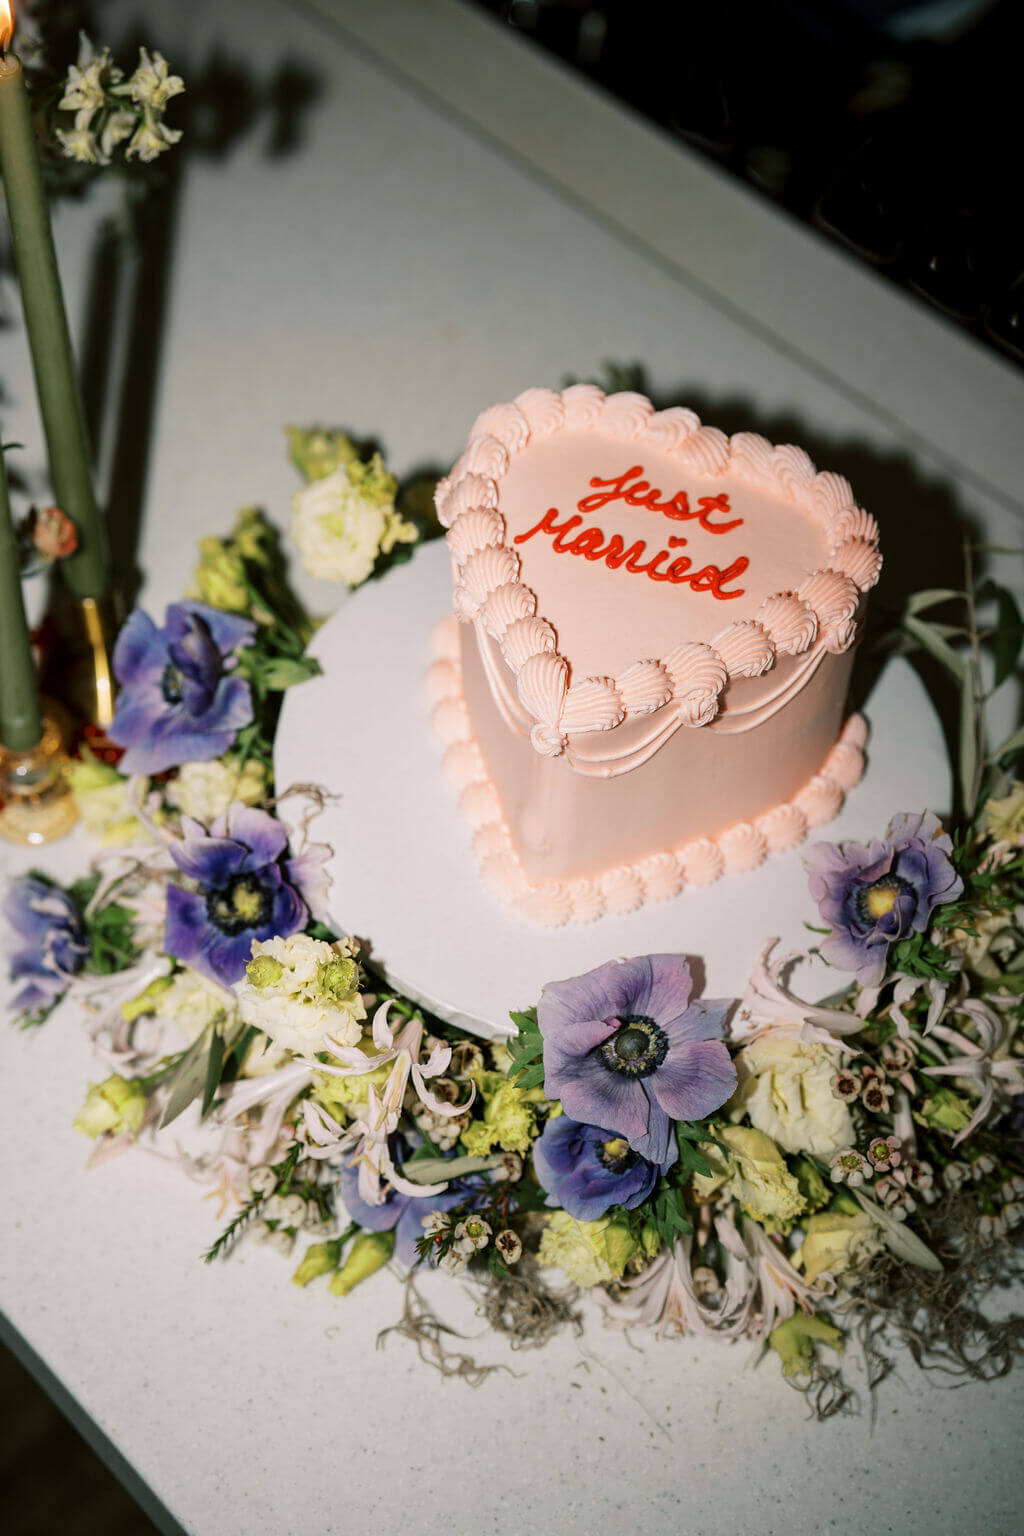 Pink heart wedding cake